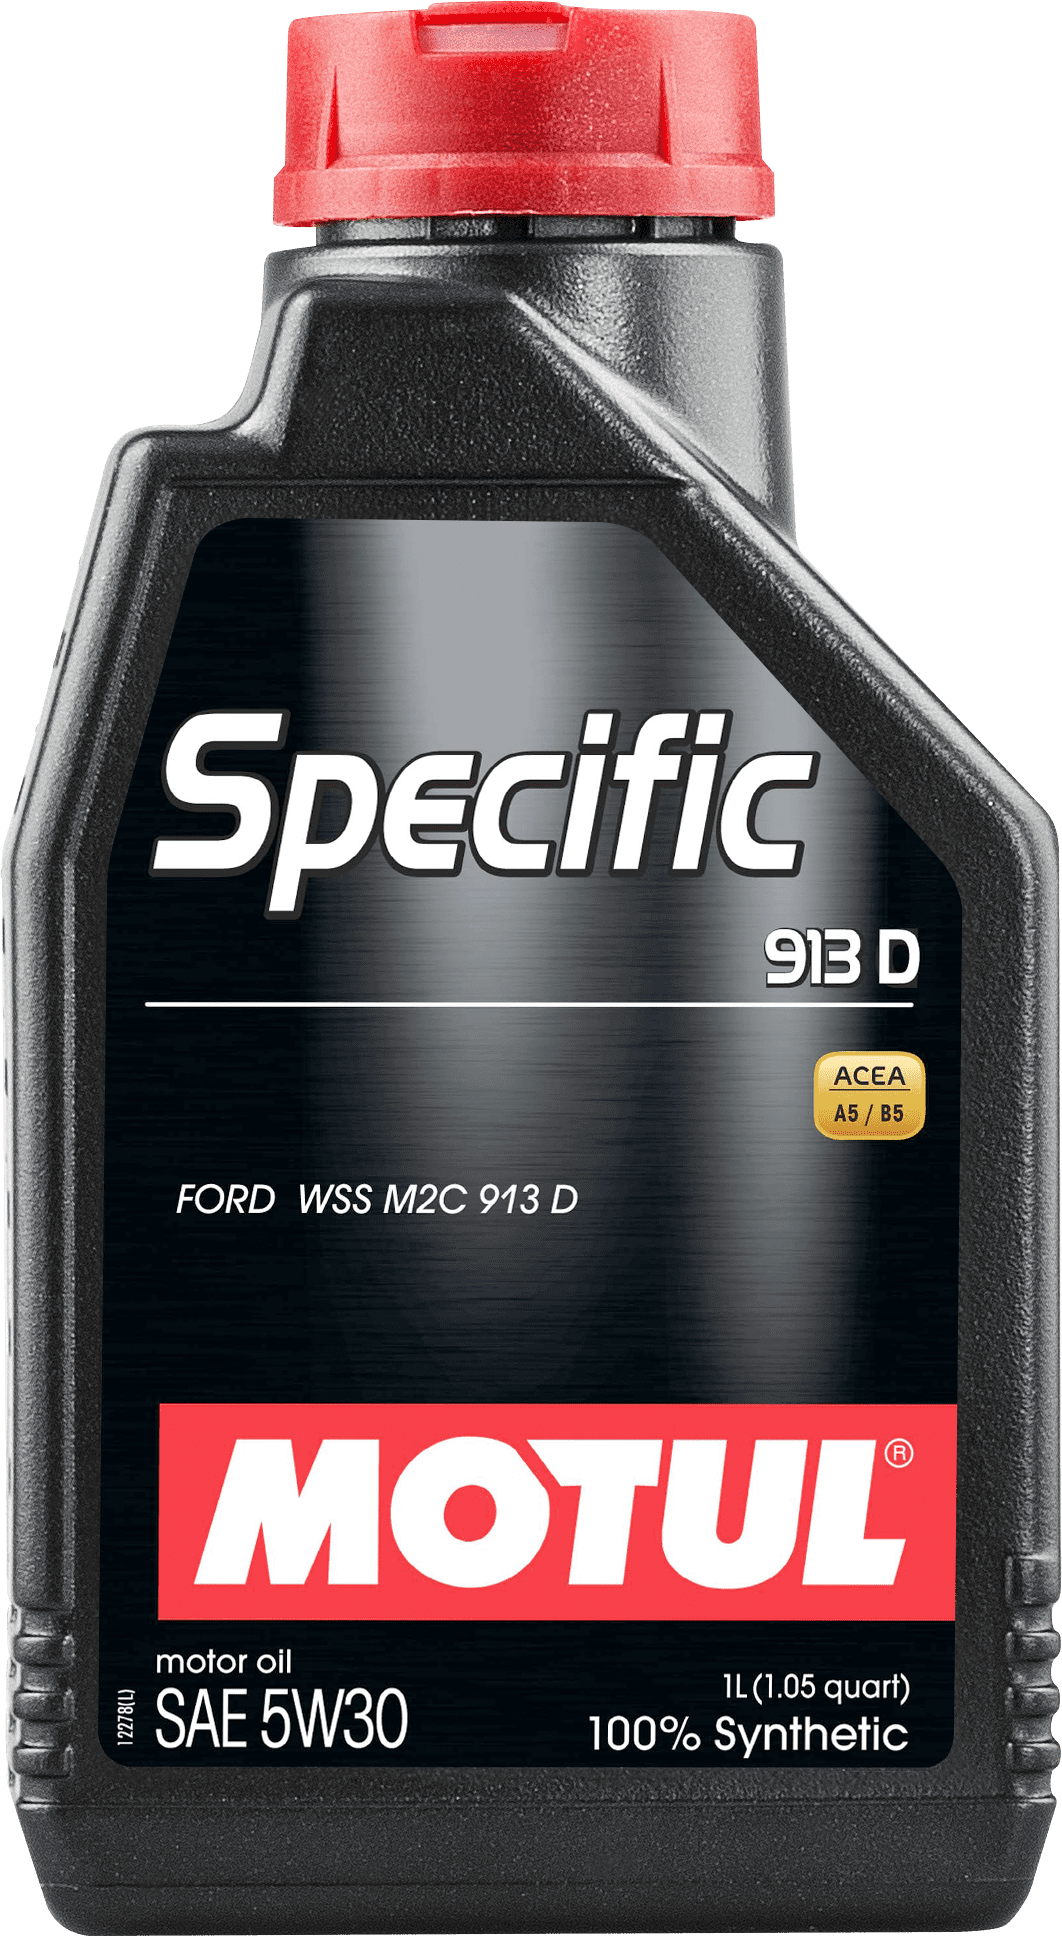 104559-1 FORD 913D goedgekeurde motorolie - 100% synthetisch smeermiddel speciaal ontwikkeld voor FORD benzine- en dieselmotoren die een goedgekeurde FORD WSS M2C 913D motorolie vereisen.